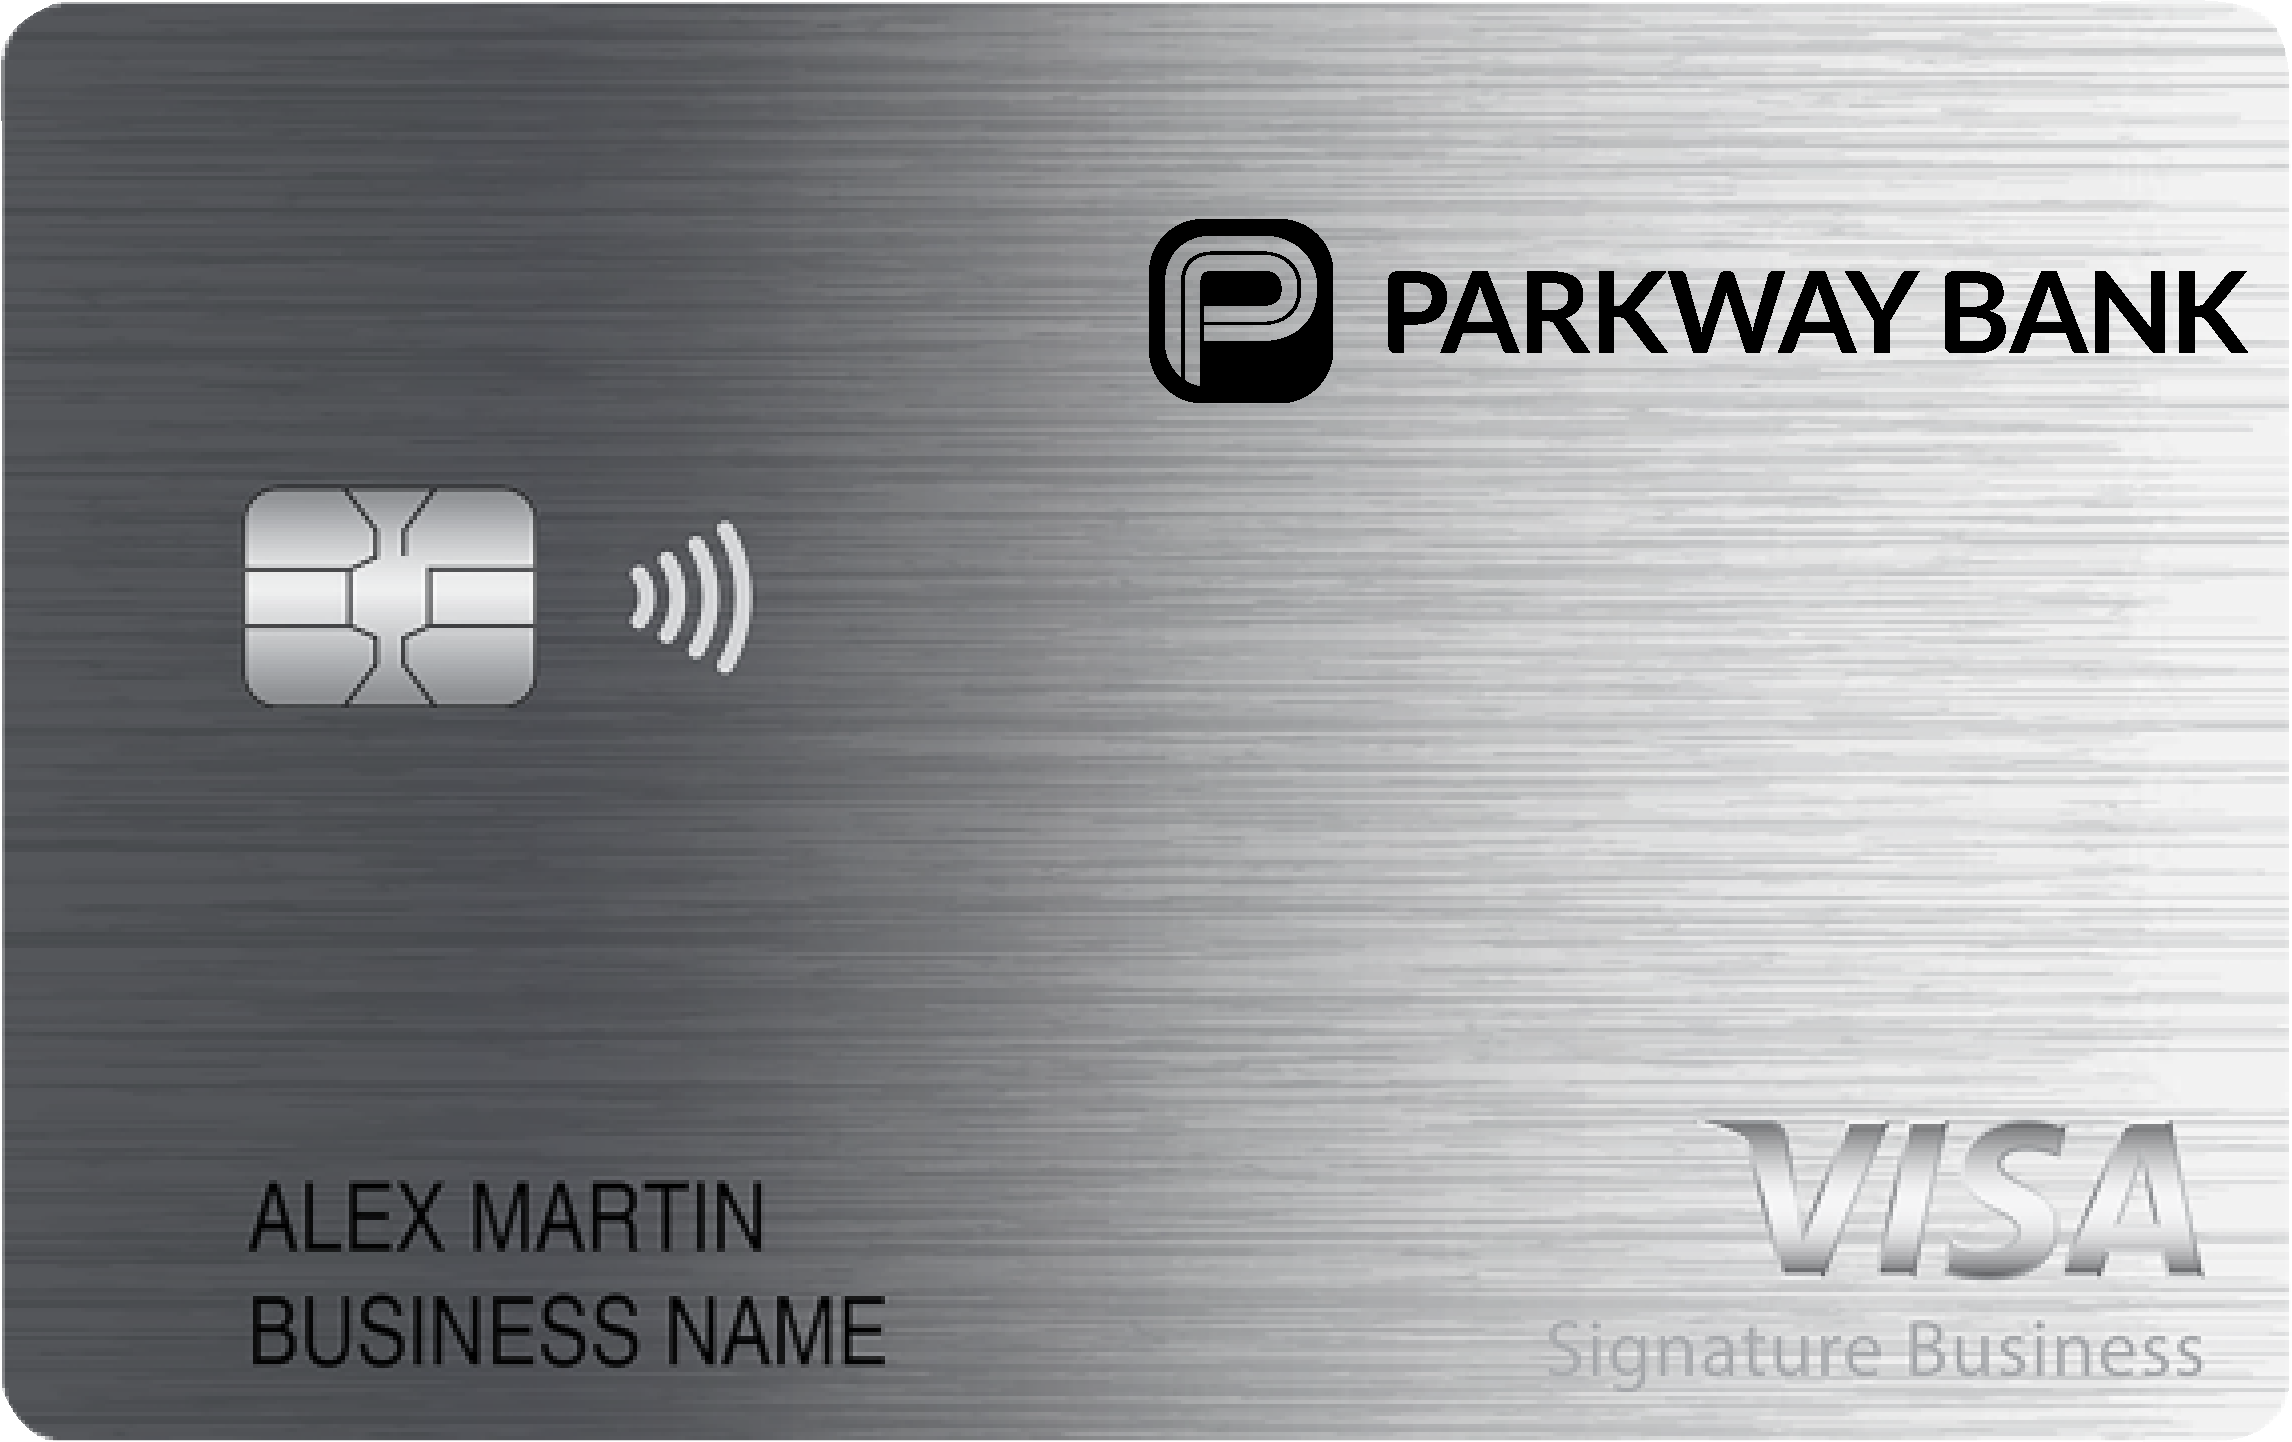 Parkway Bank Smart Business Rewards Card